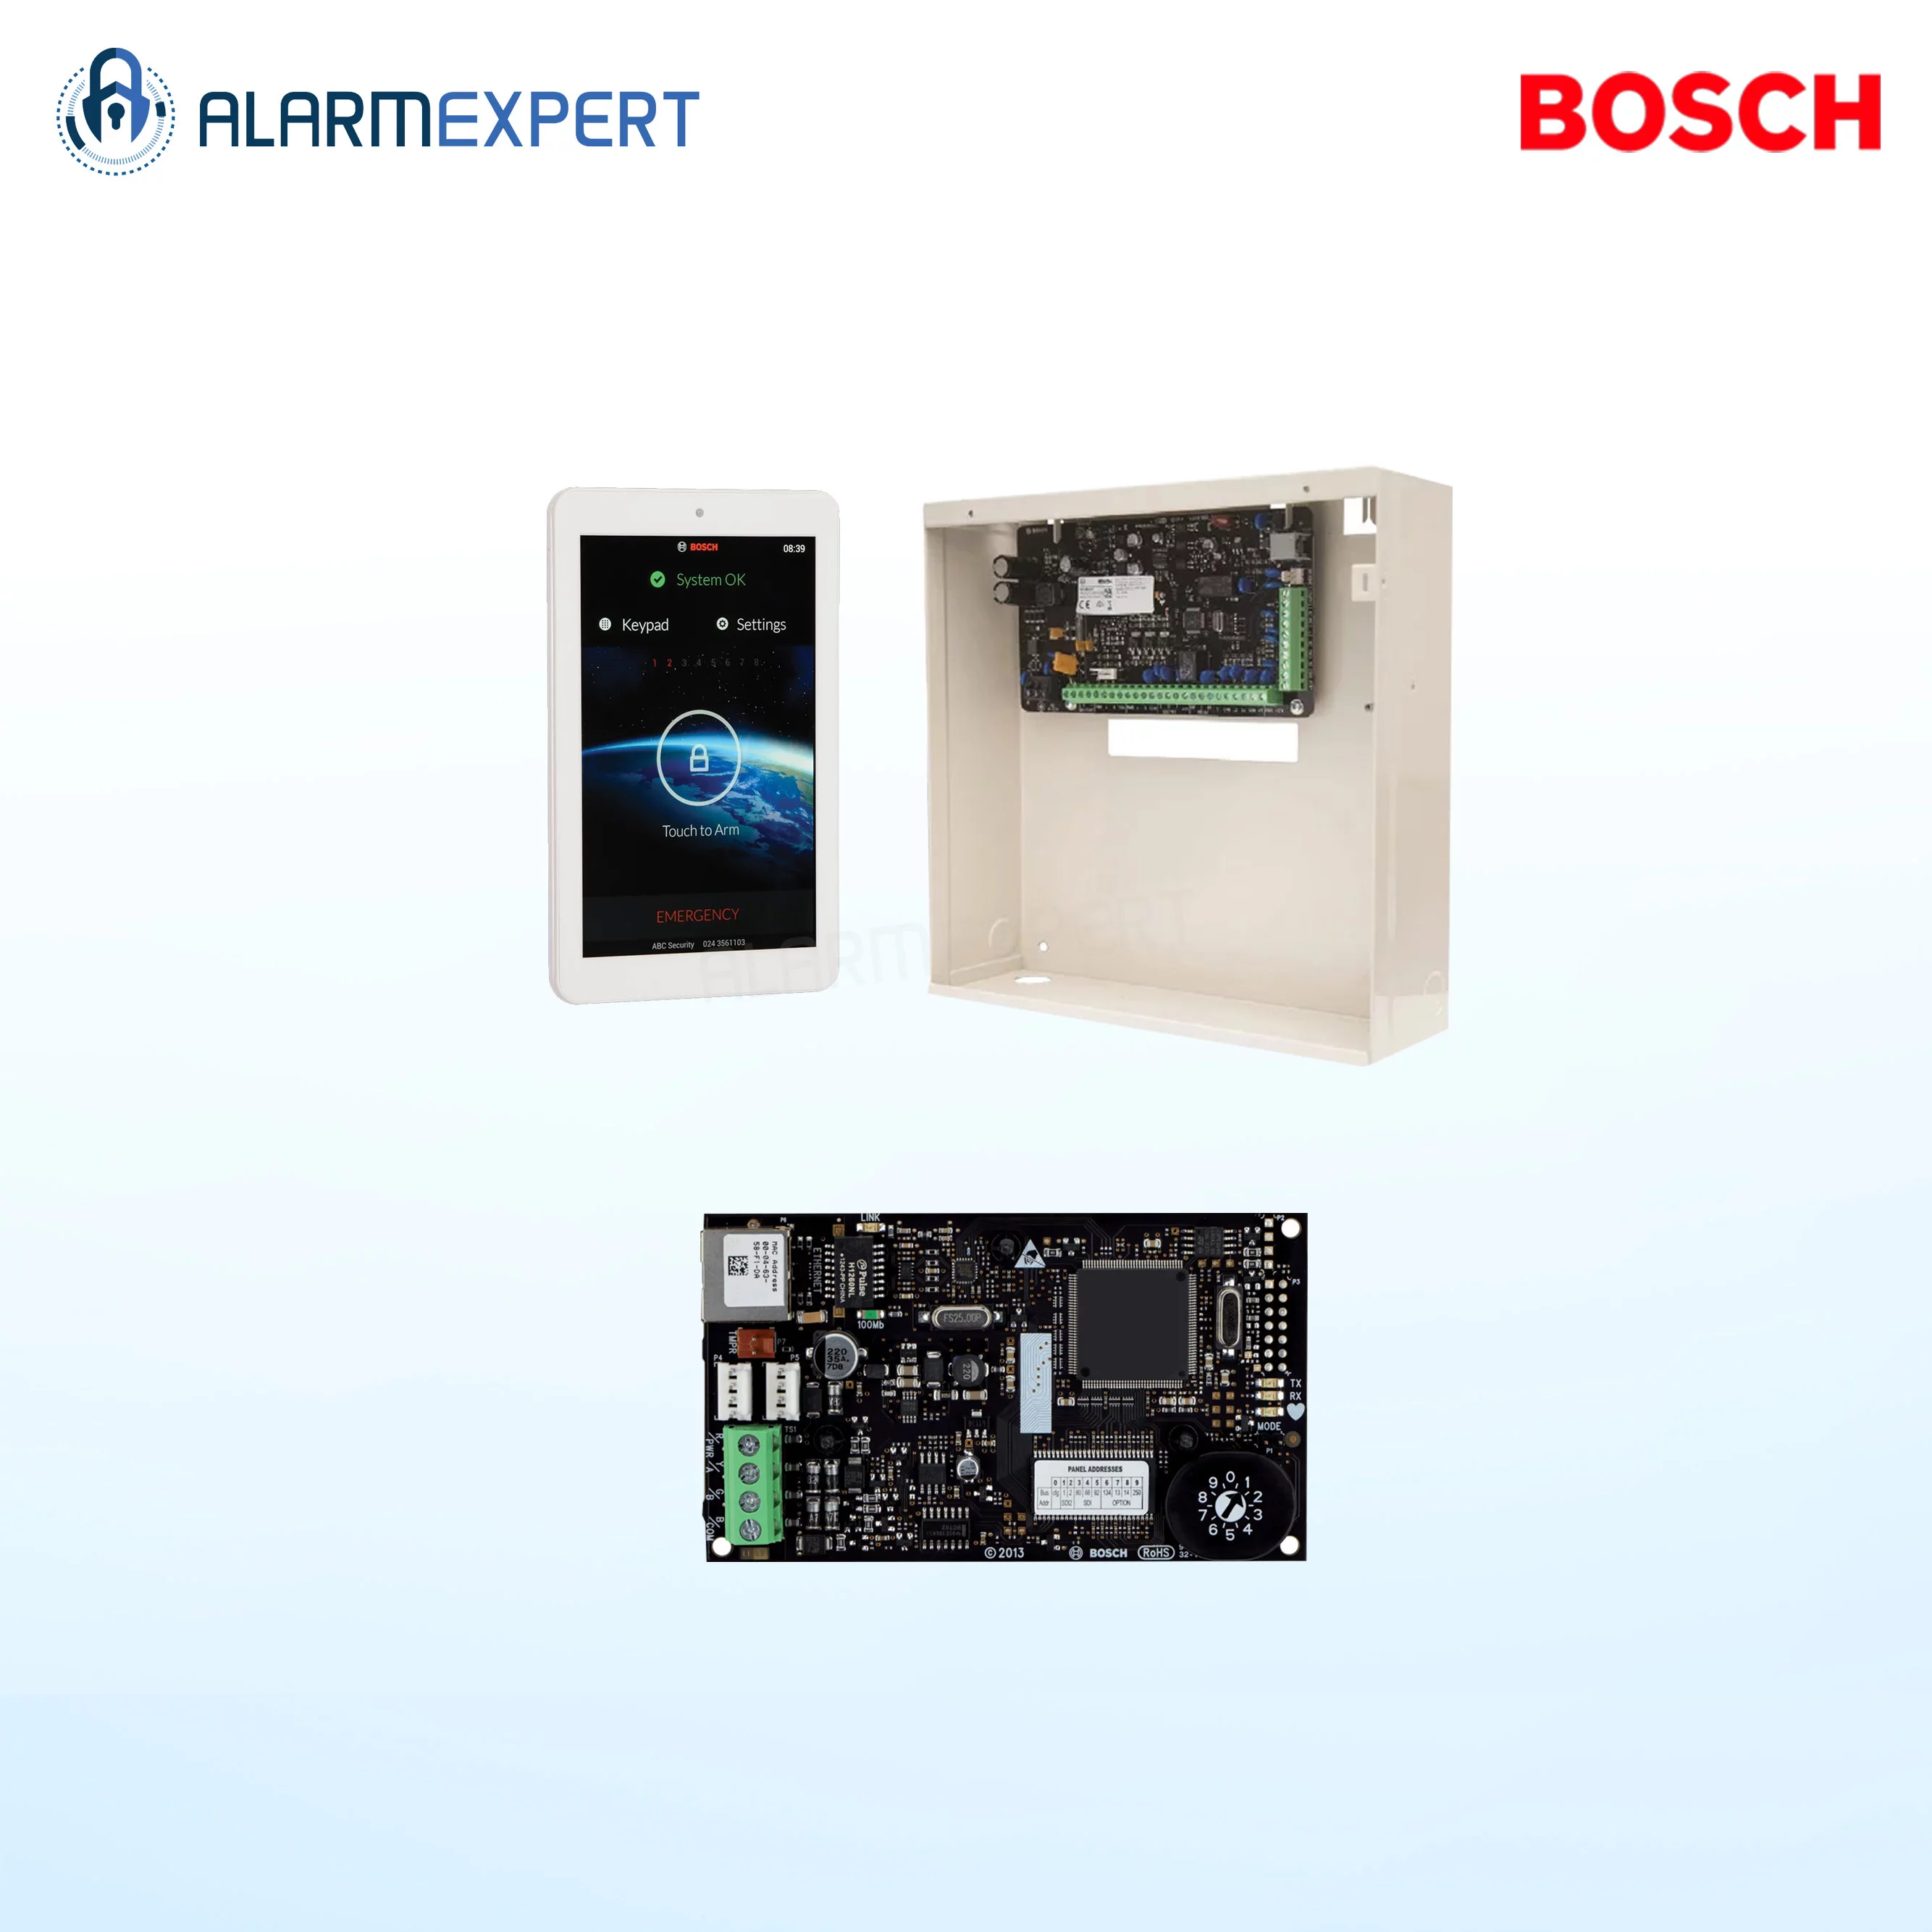 Bosch Solution 2000 IP + Upgrade Kit + 7" Touch screen Keypad